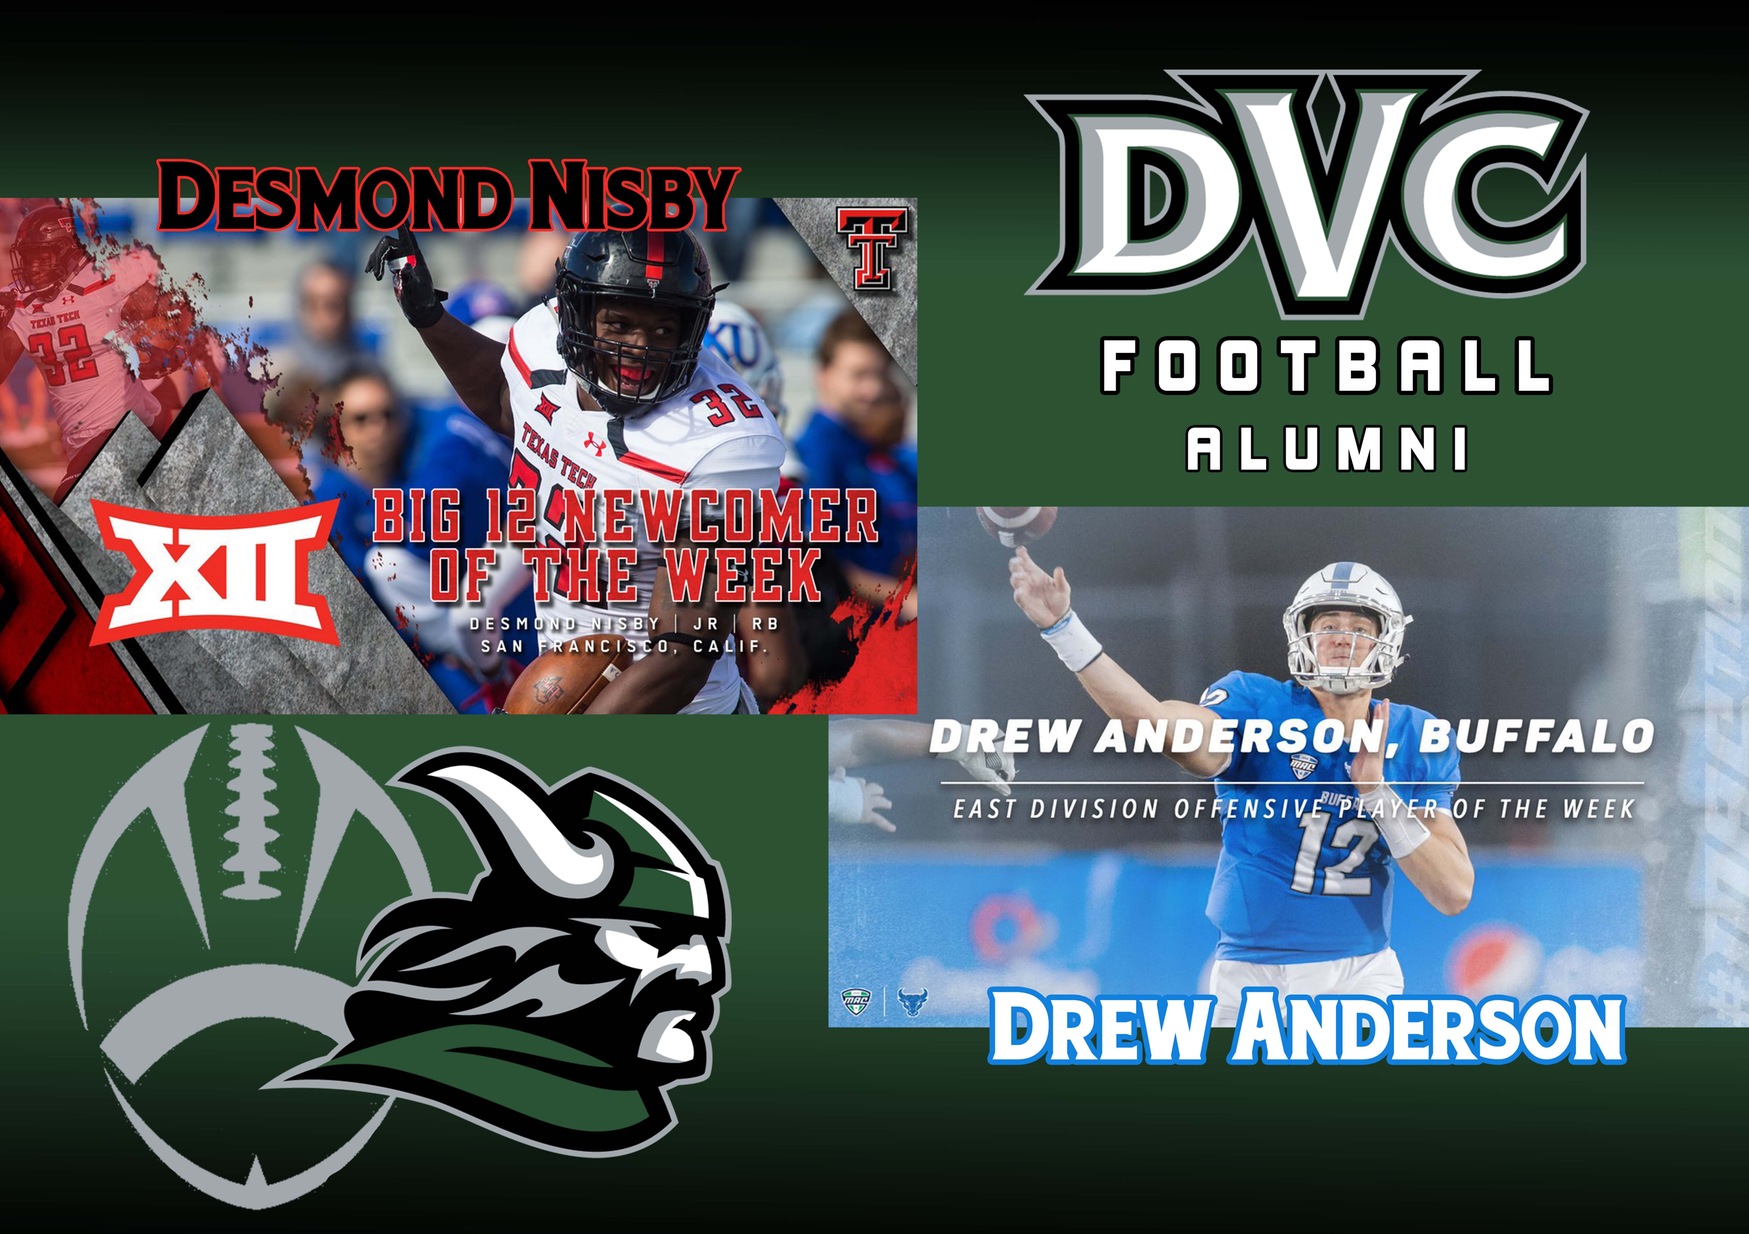 Big Week for Vikings Football Alumni, Drew Anderson and Desmond Nisby